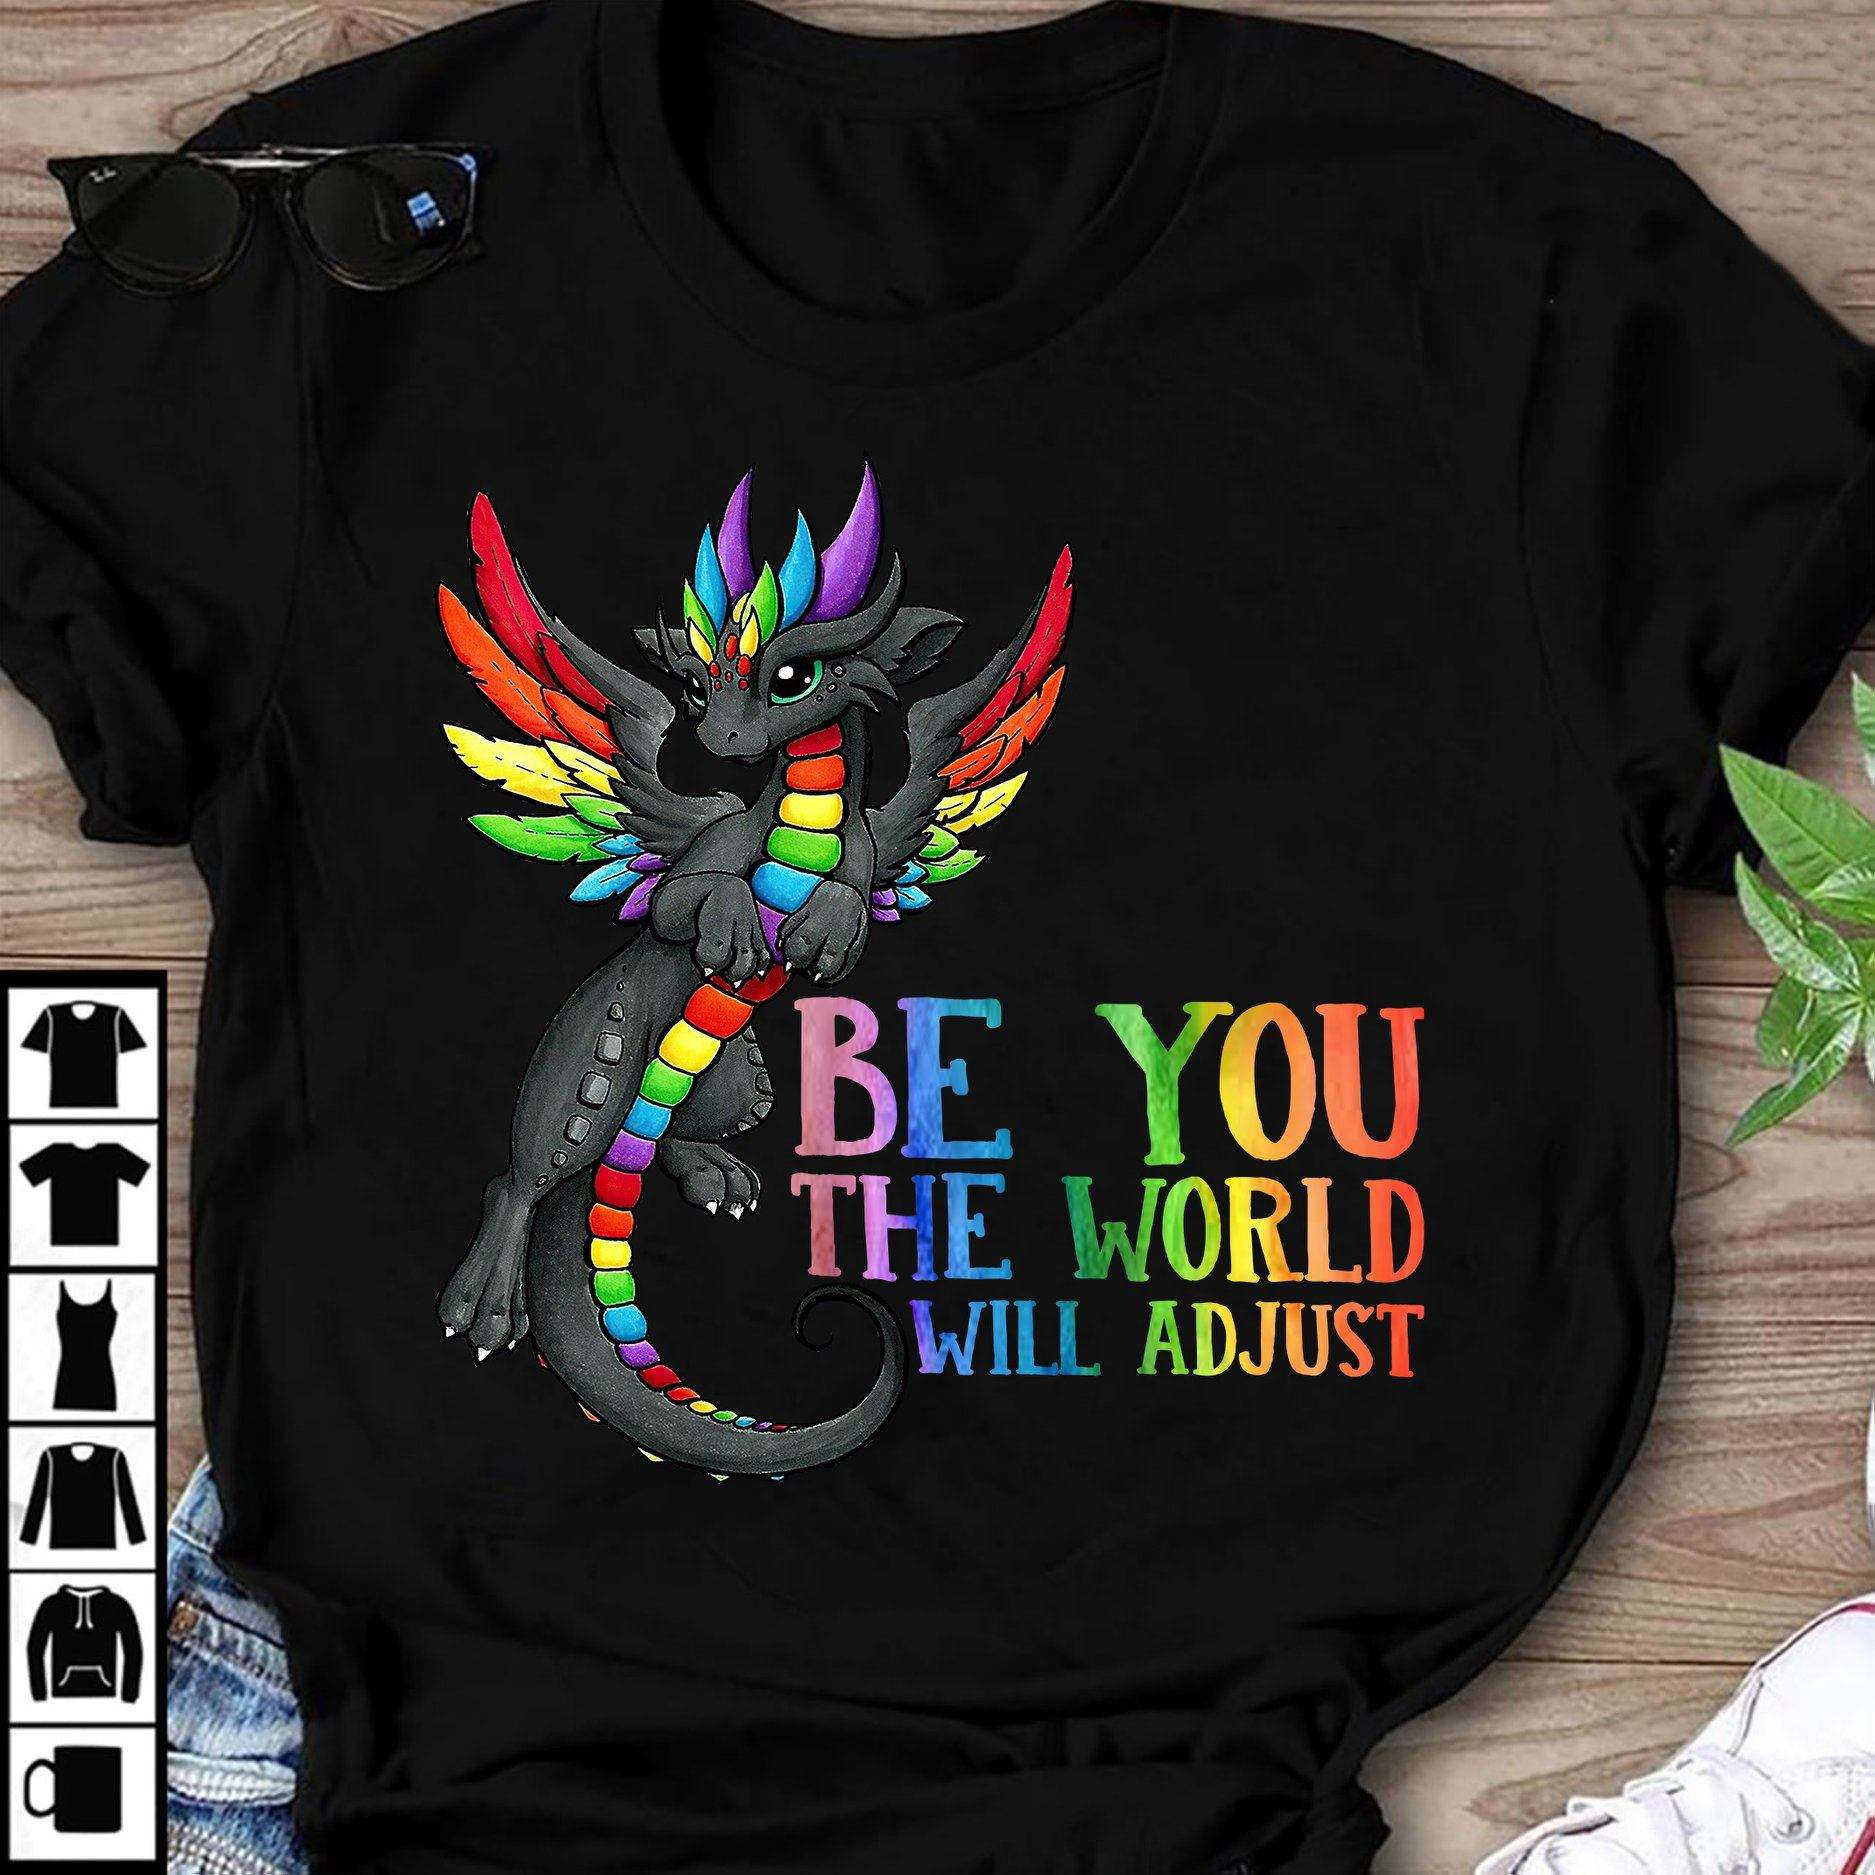 Be you the world will adjust - Dragon lgbt, lgbt community